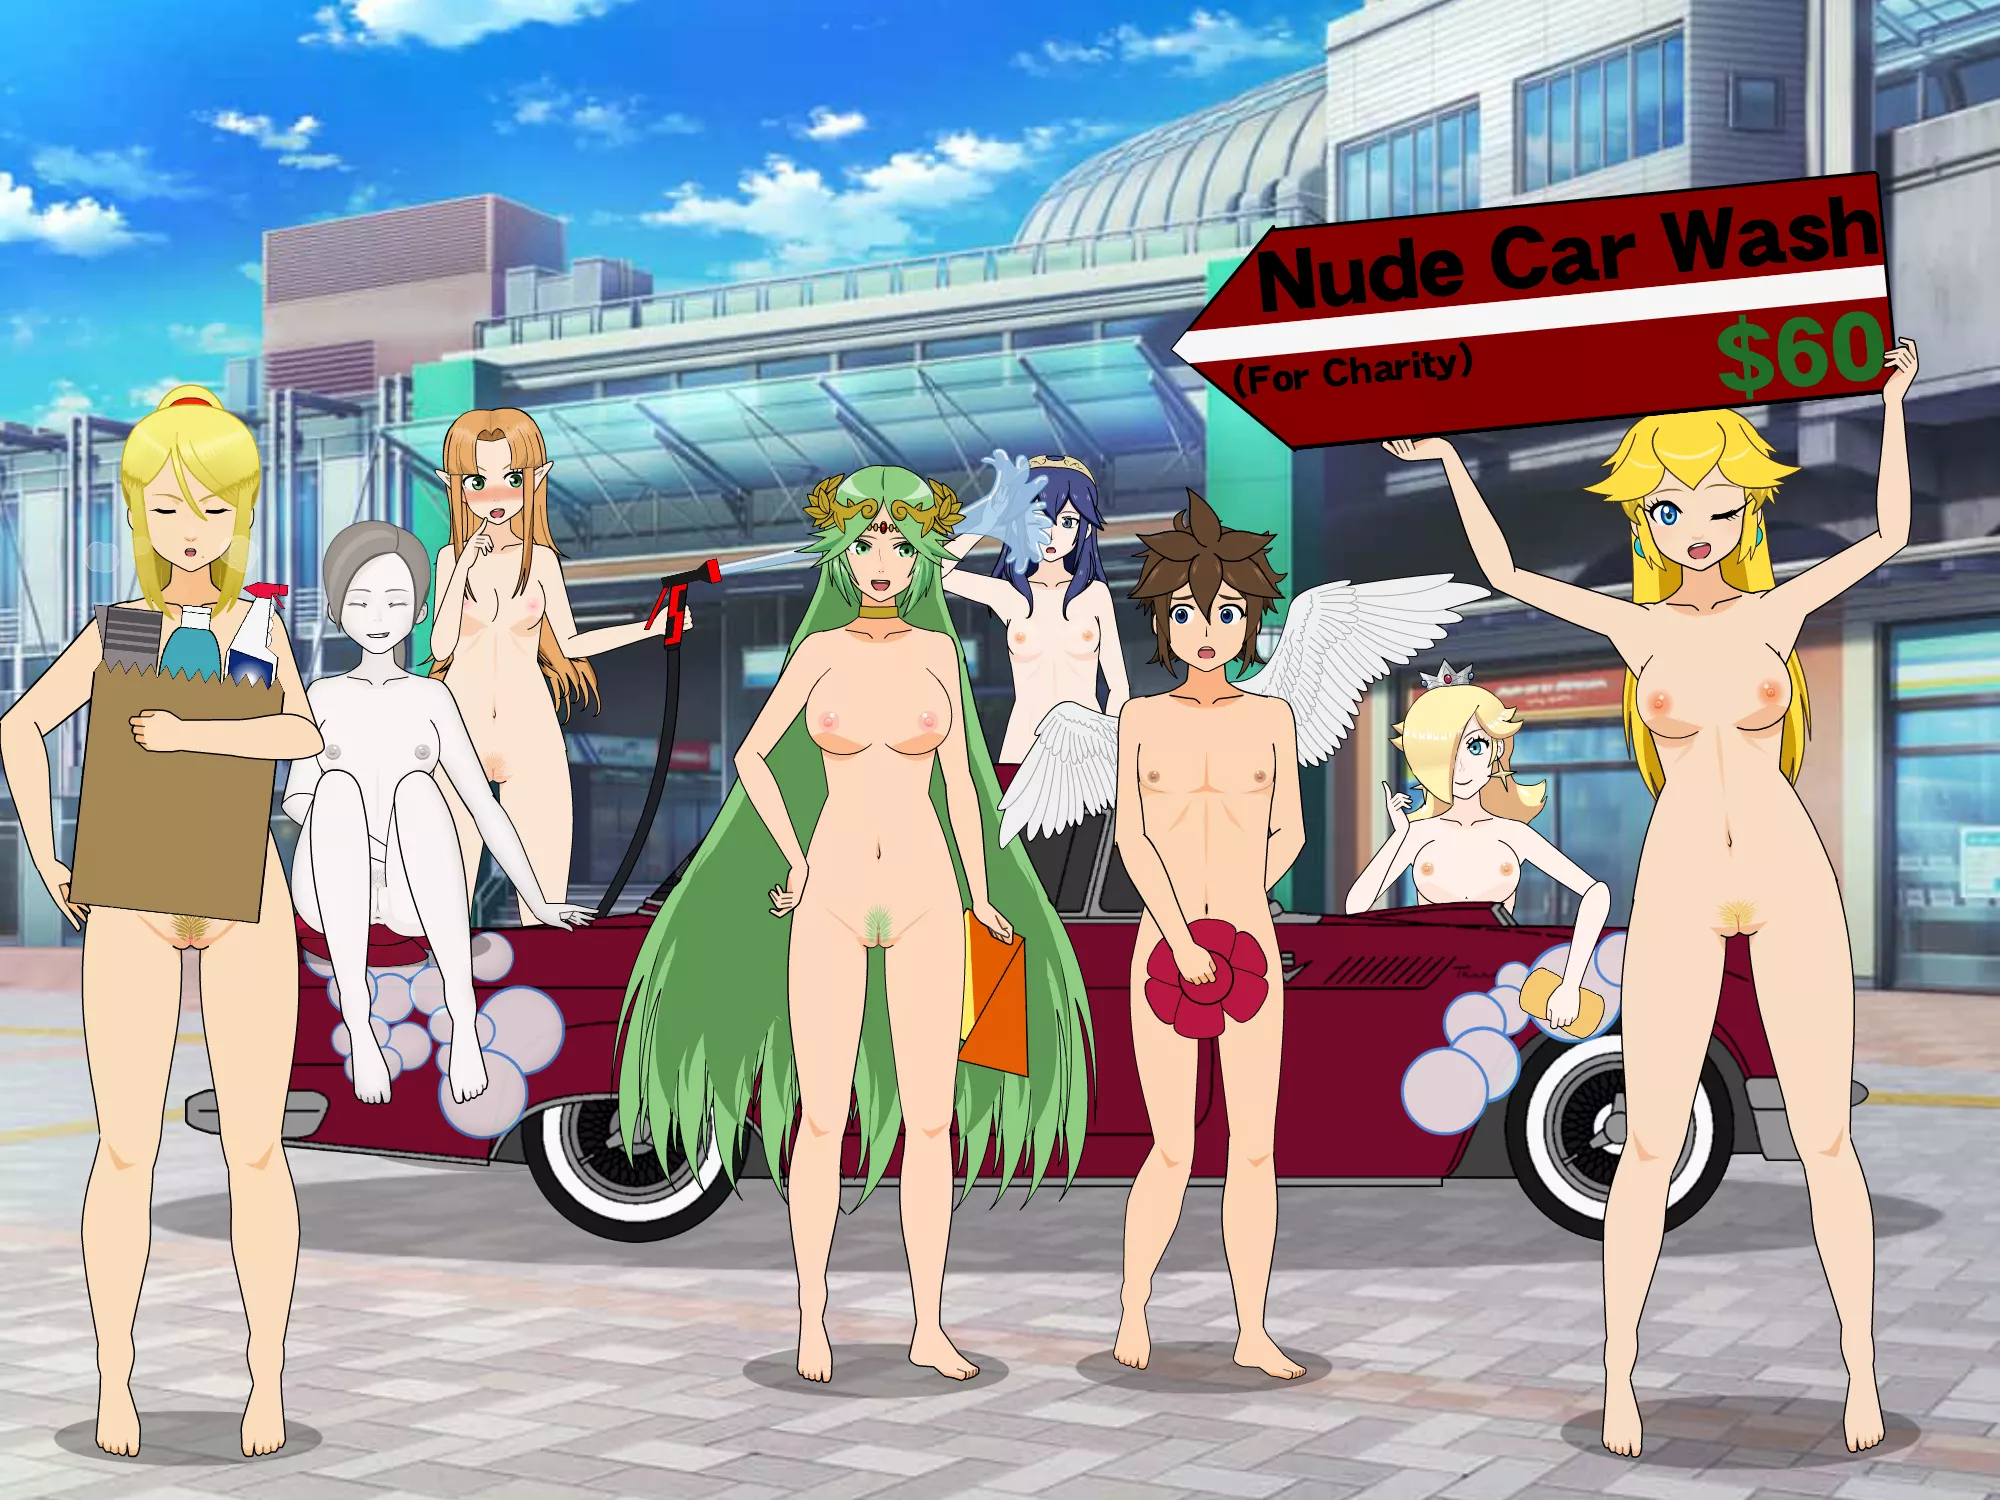 Samus And Pit Hentai - Super Car Wash Bros. (Pit, Palutena, Samus, Peach, Rosalina, Wii Fit  Trainer, Lucina, Zelda) nudes : smashbros34 | NUDE-PICS.ORG